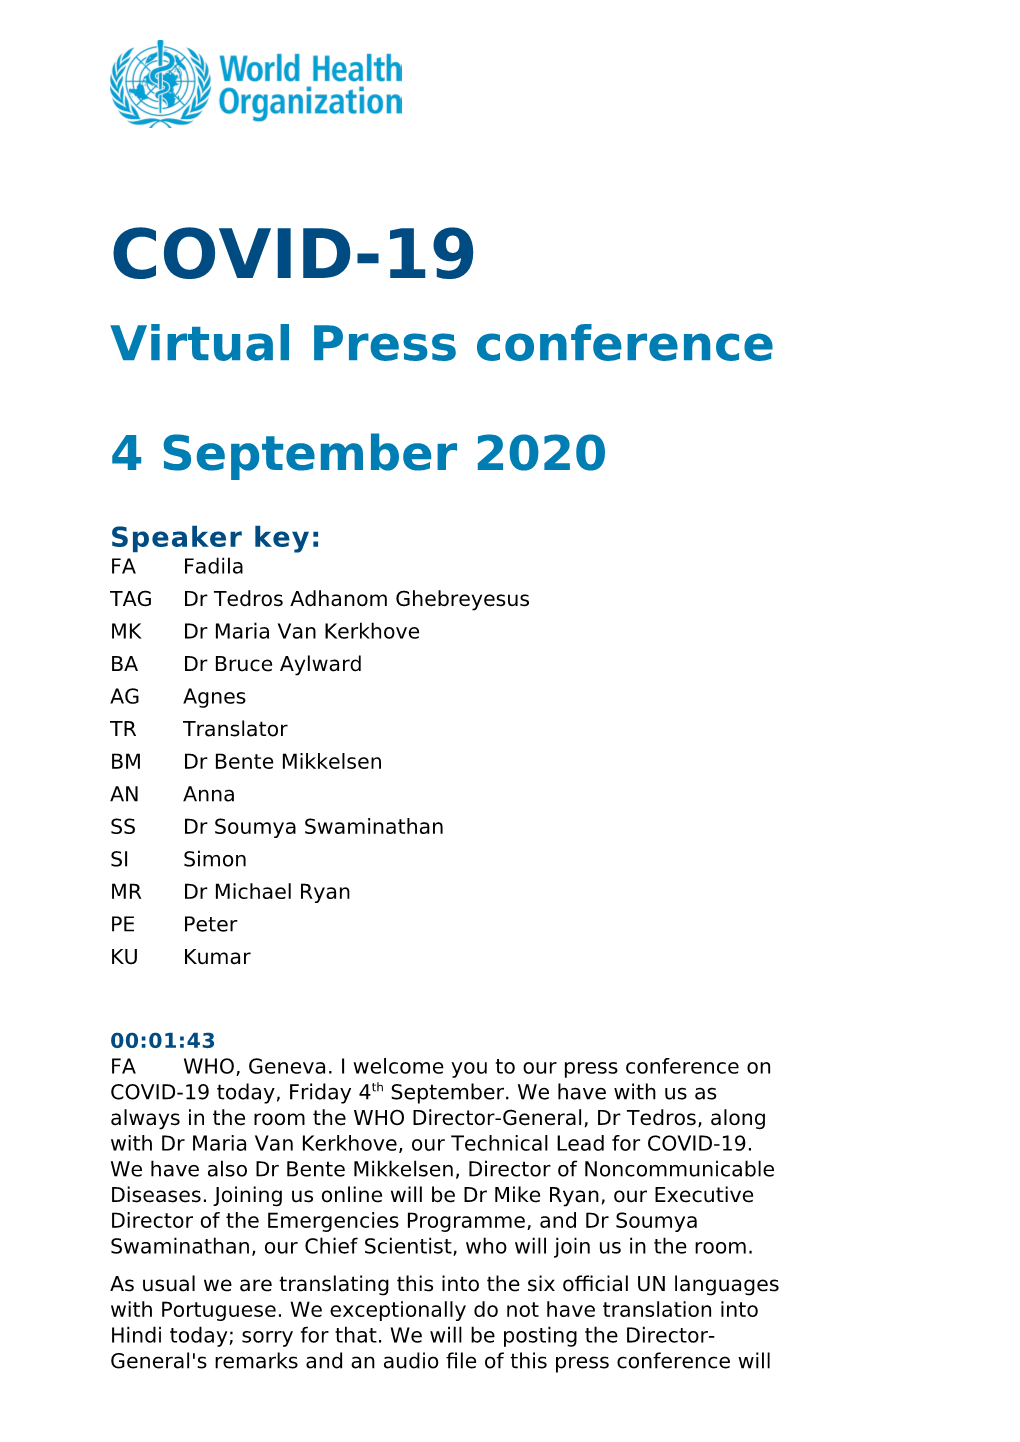 Virtual Press Conference 4 September 2020